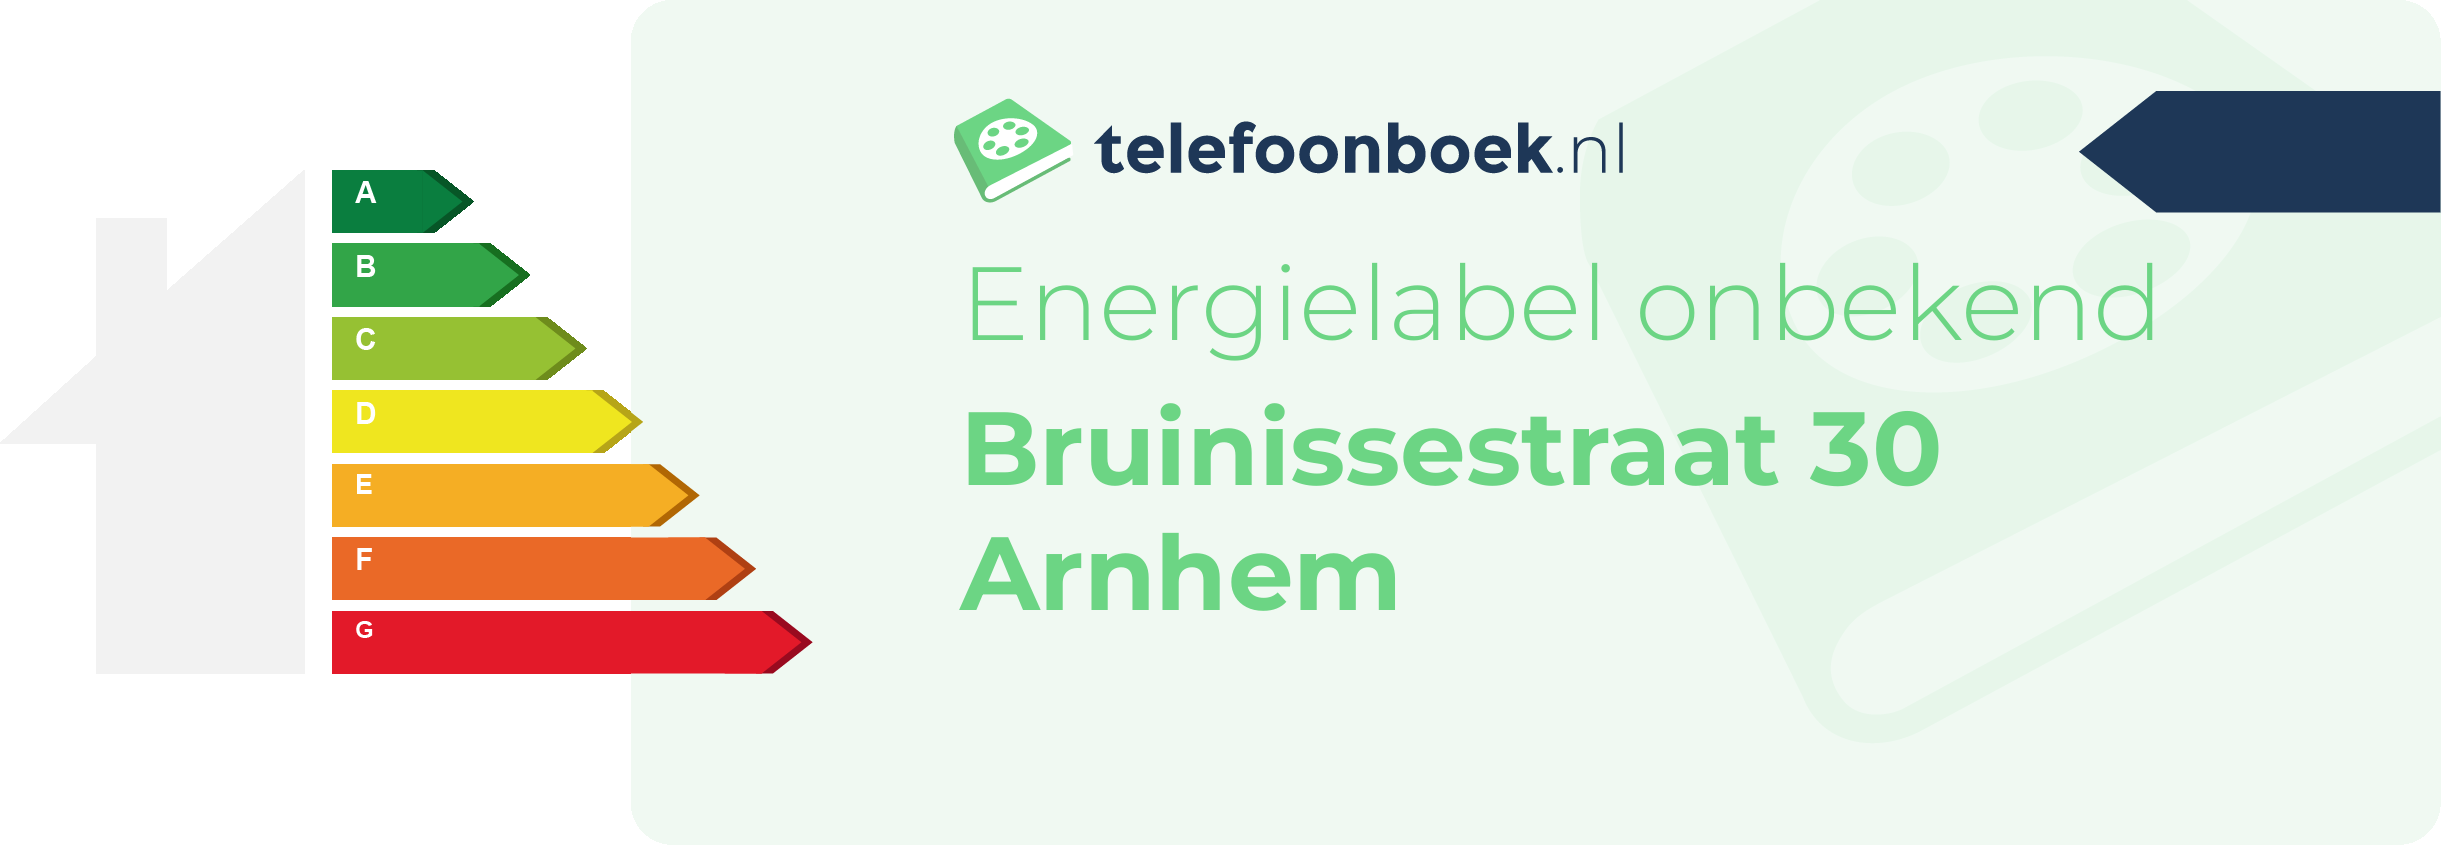 Energielabel Bruinissestraat 30 Arnhem